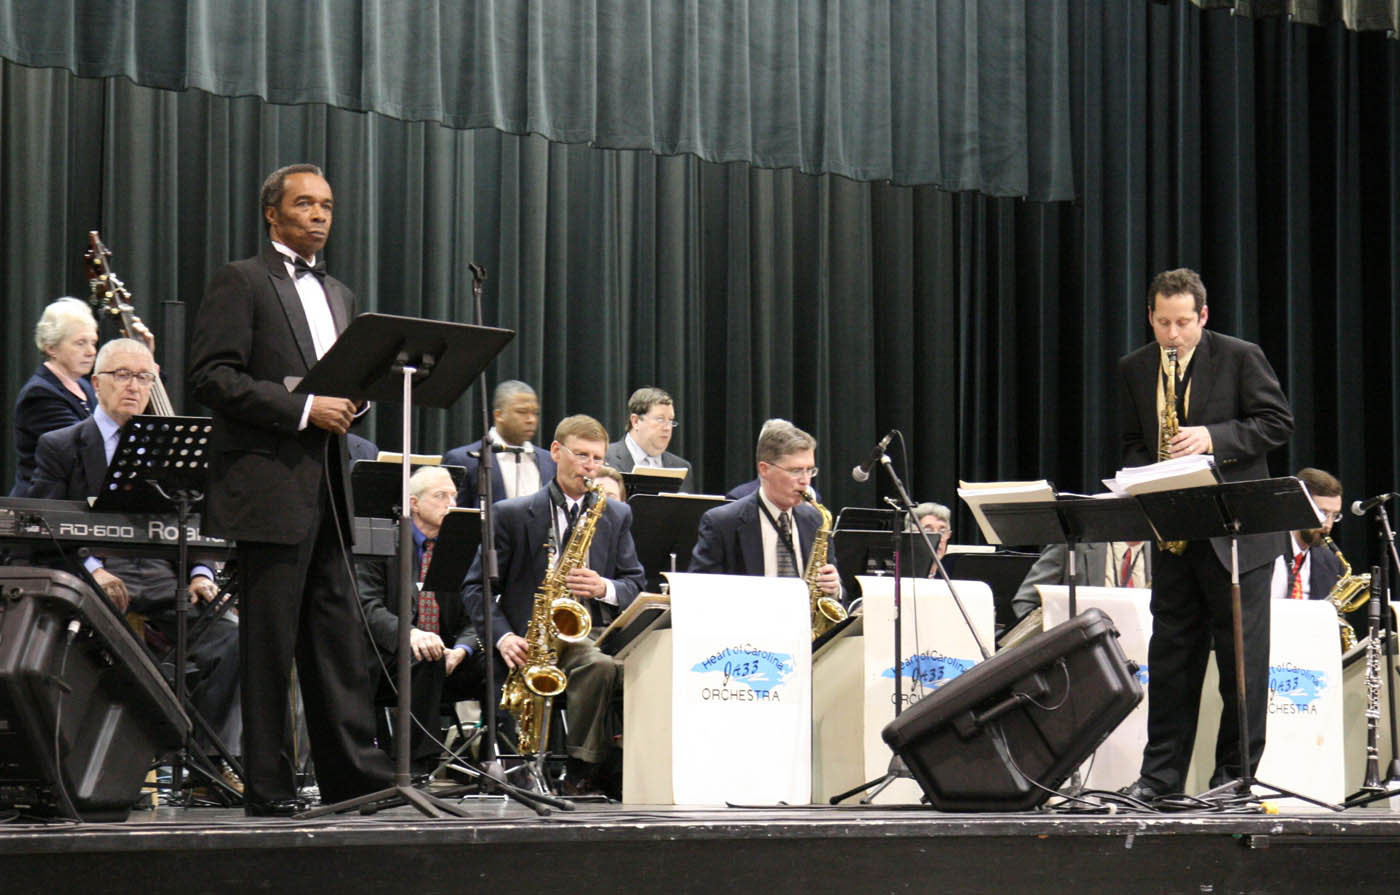 Read the full story, Central Carolina C.C. hosts Heart of Carolina Jazz concert